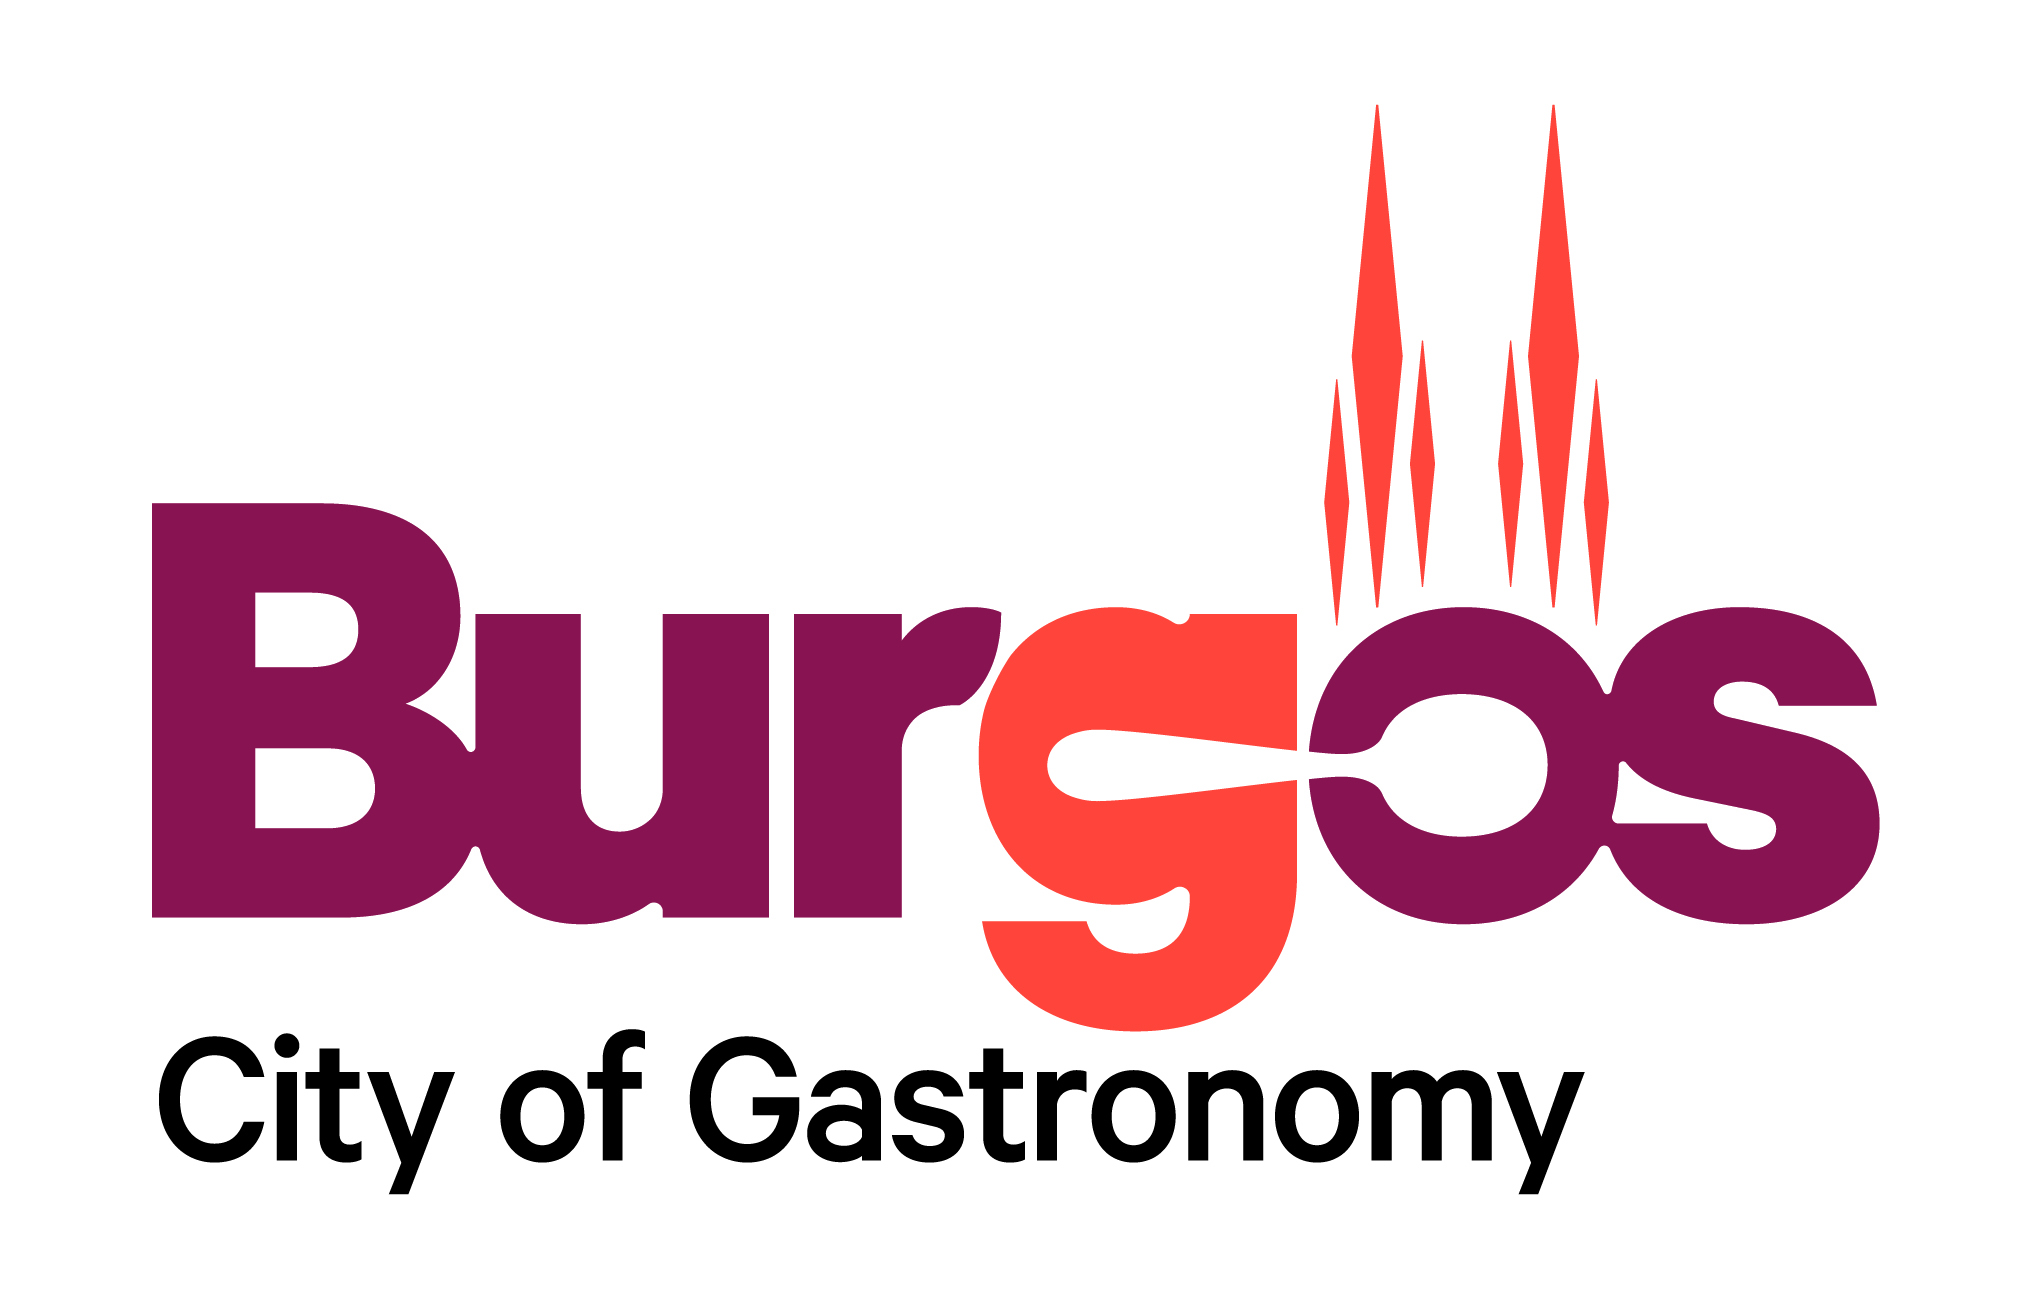 BURGOS CITY OF GASTRONOMY